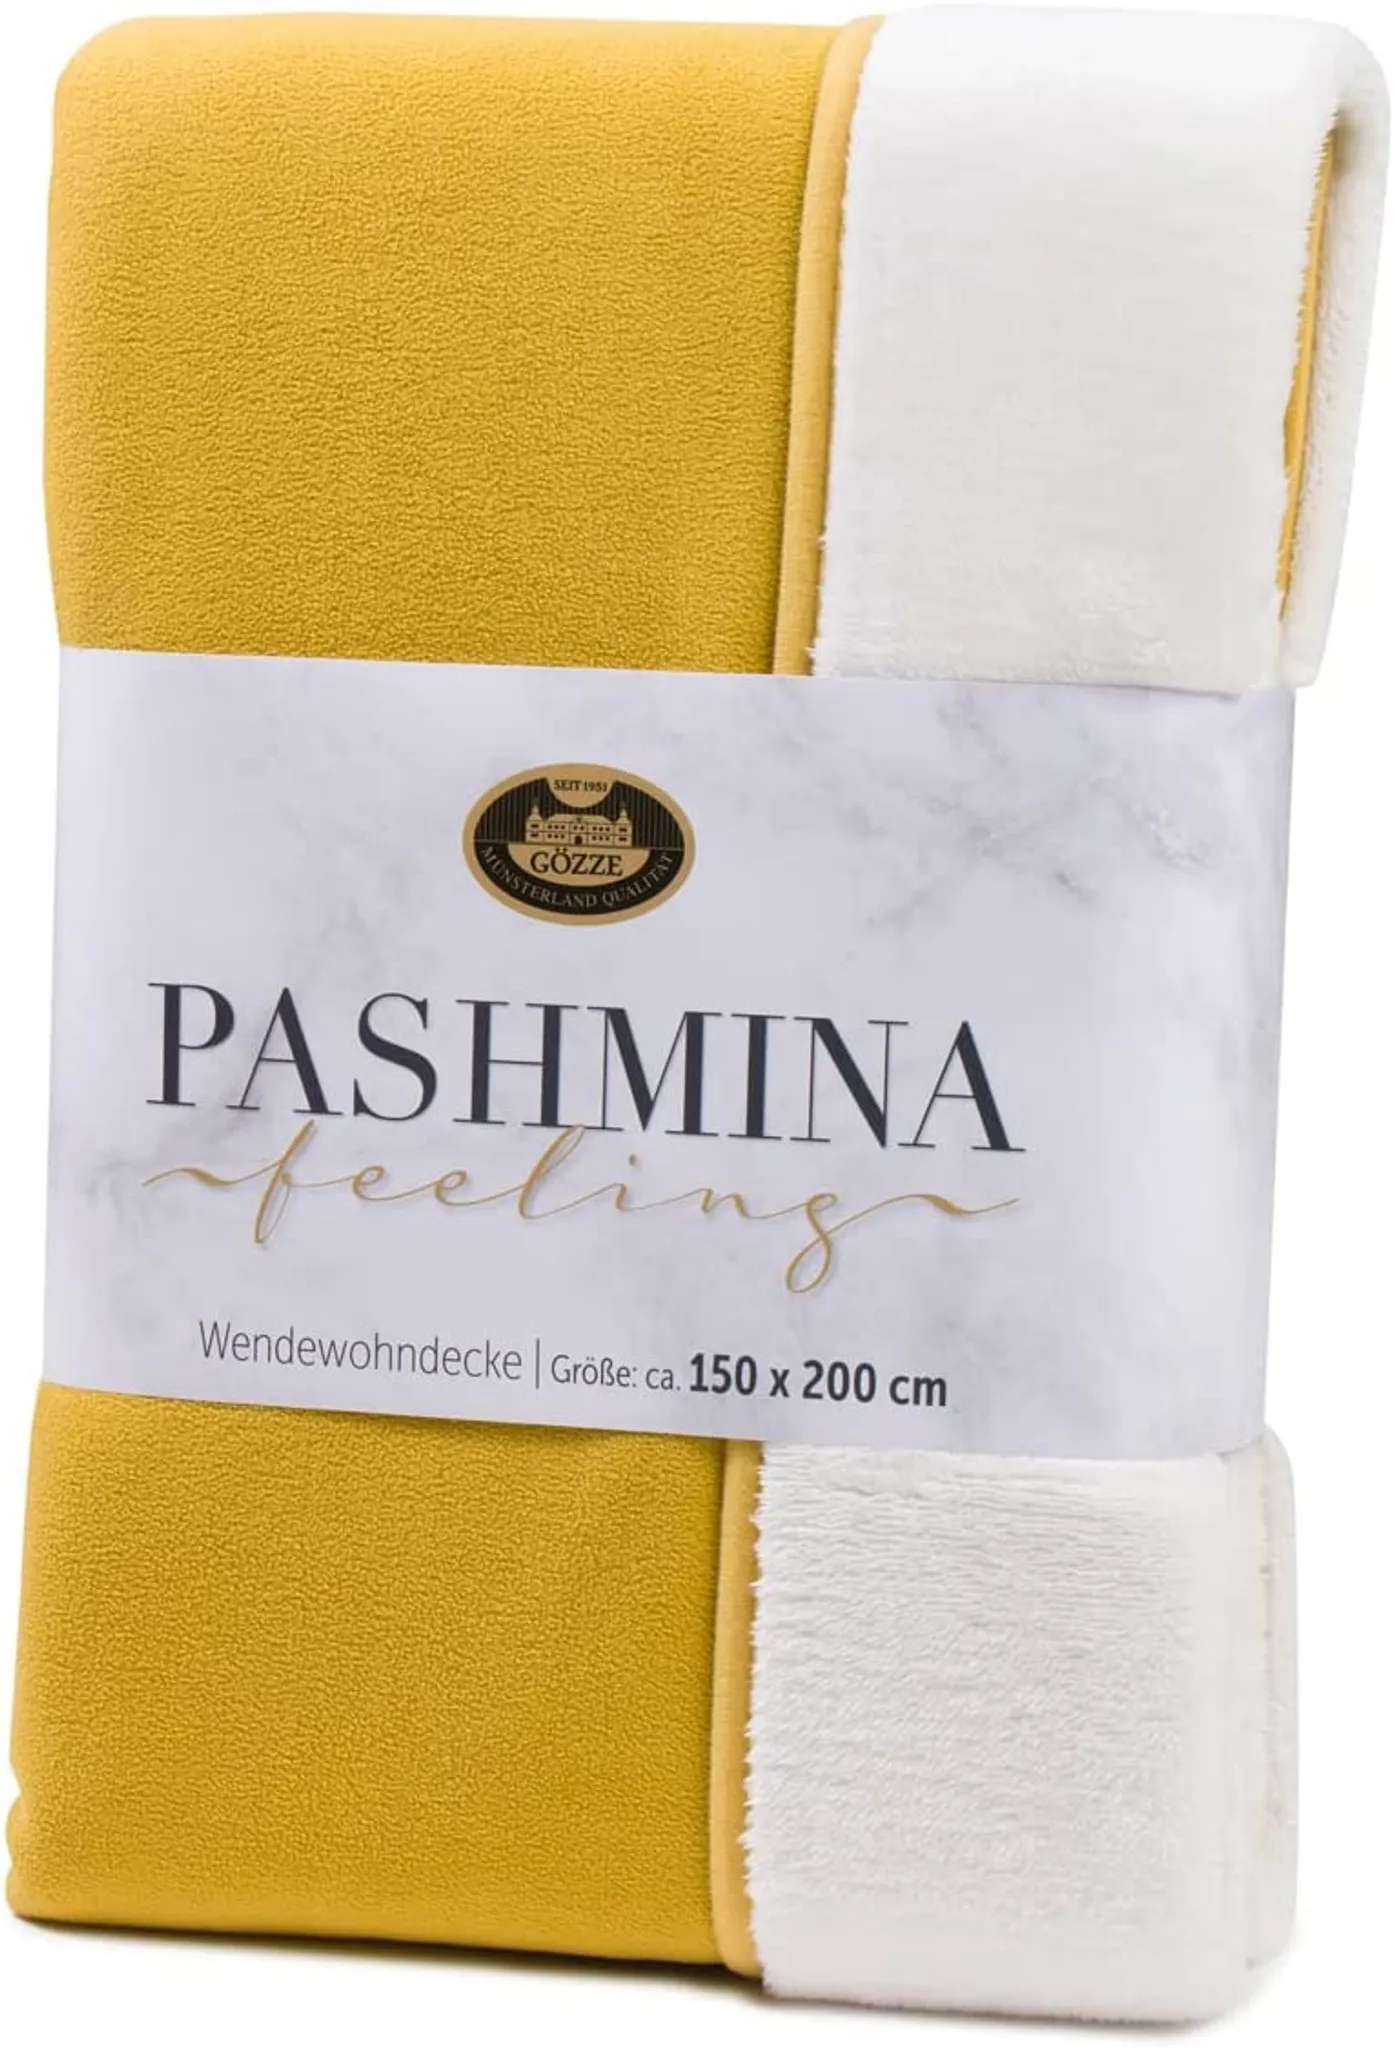 Gözze Pashmina-Feeling uni 150 Wendewohndecke